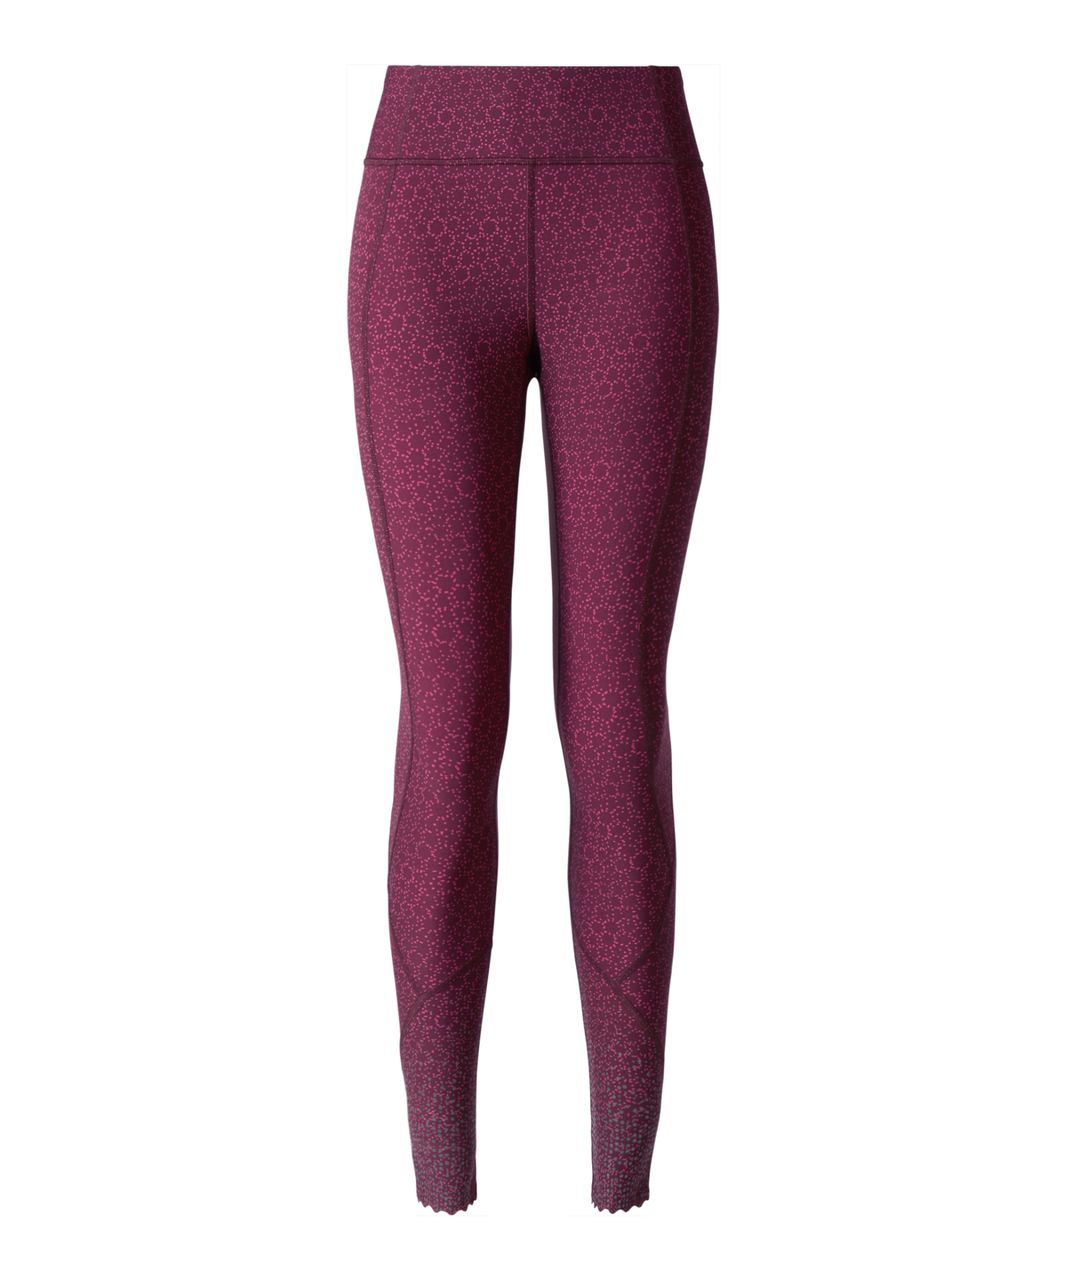 Lulu🍋 leggings size 4 on sale for $11.25 - The Raspberry Beret